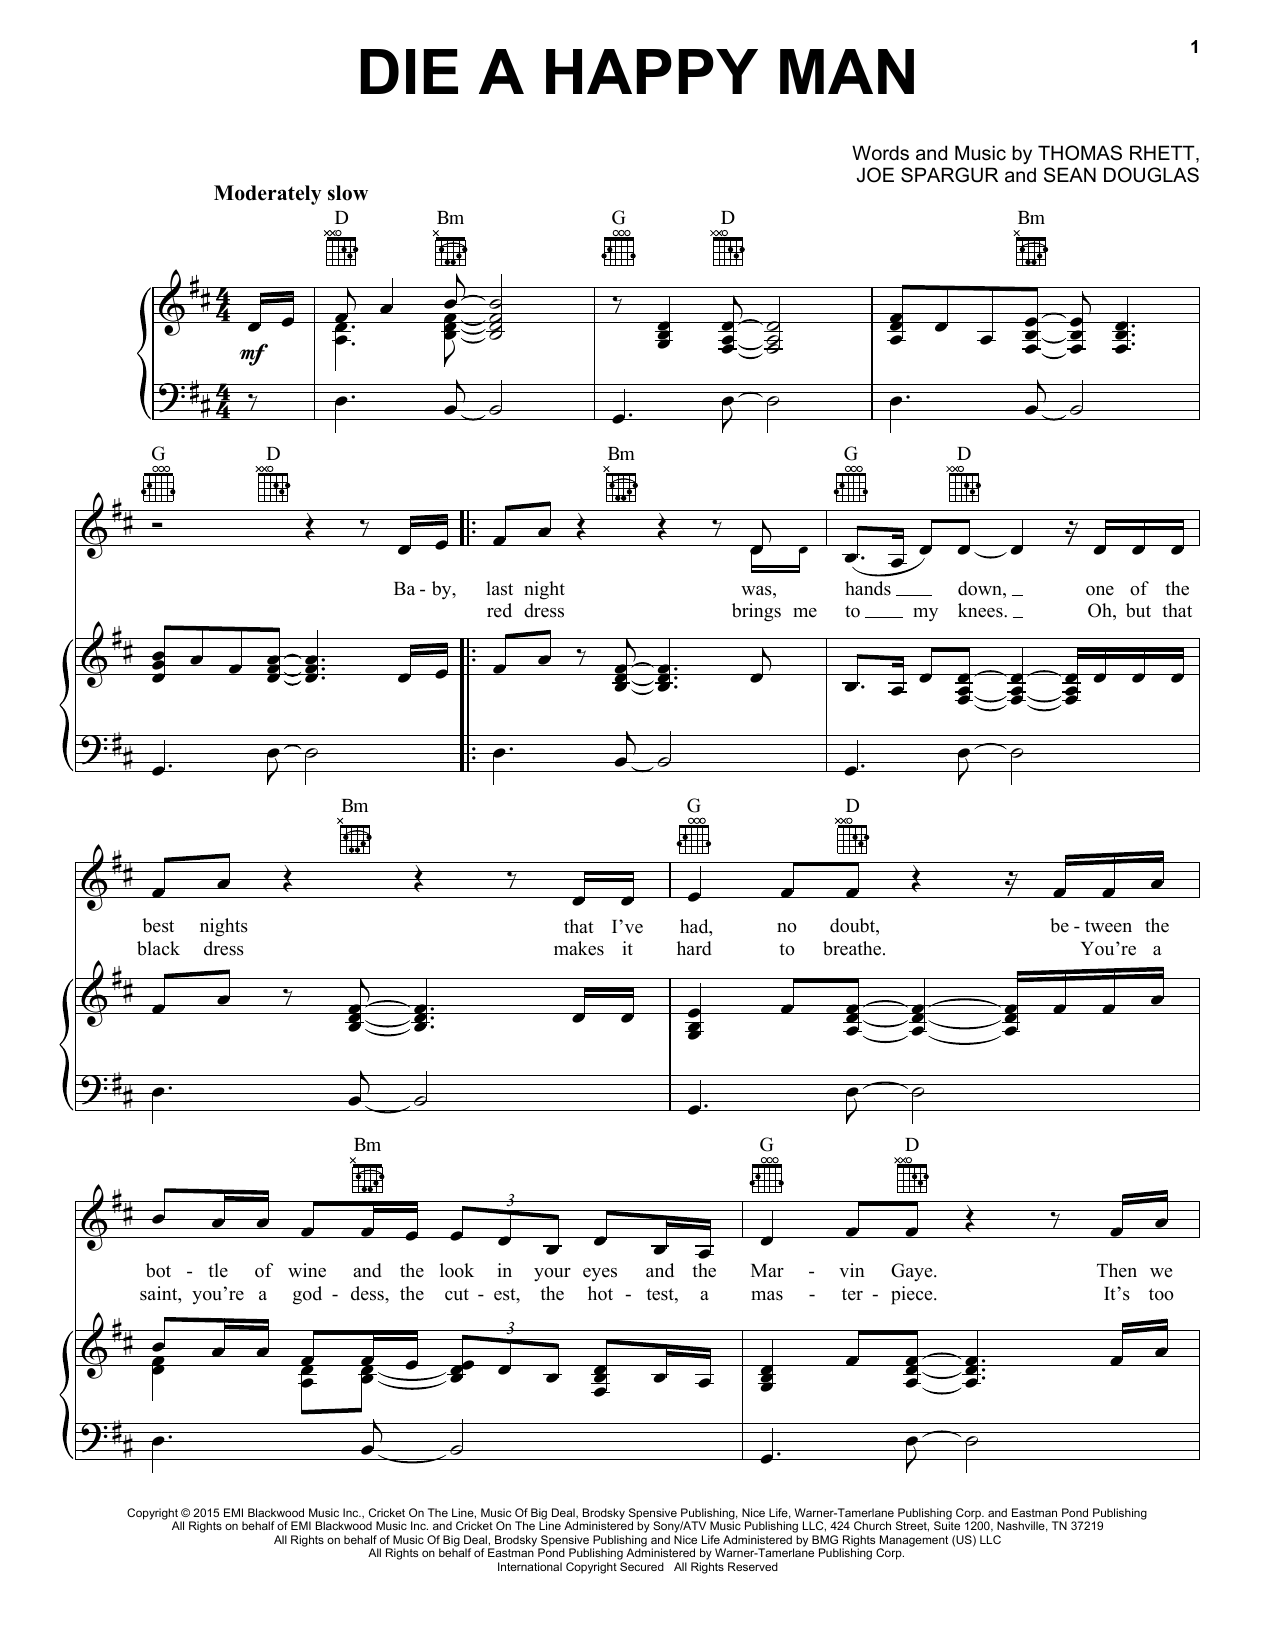 Thomas Rhett Die A Happy Man Sheet Music Notes & Chords for Flute - Download or Print PDF